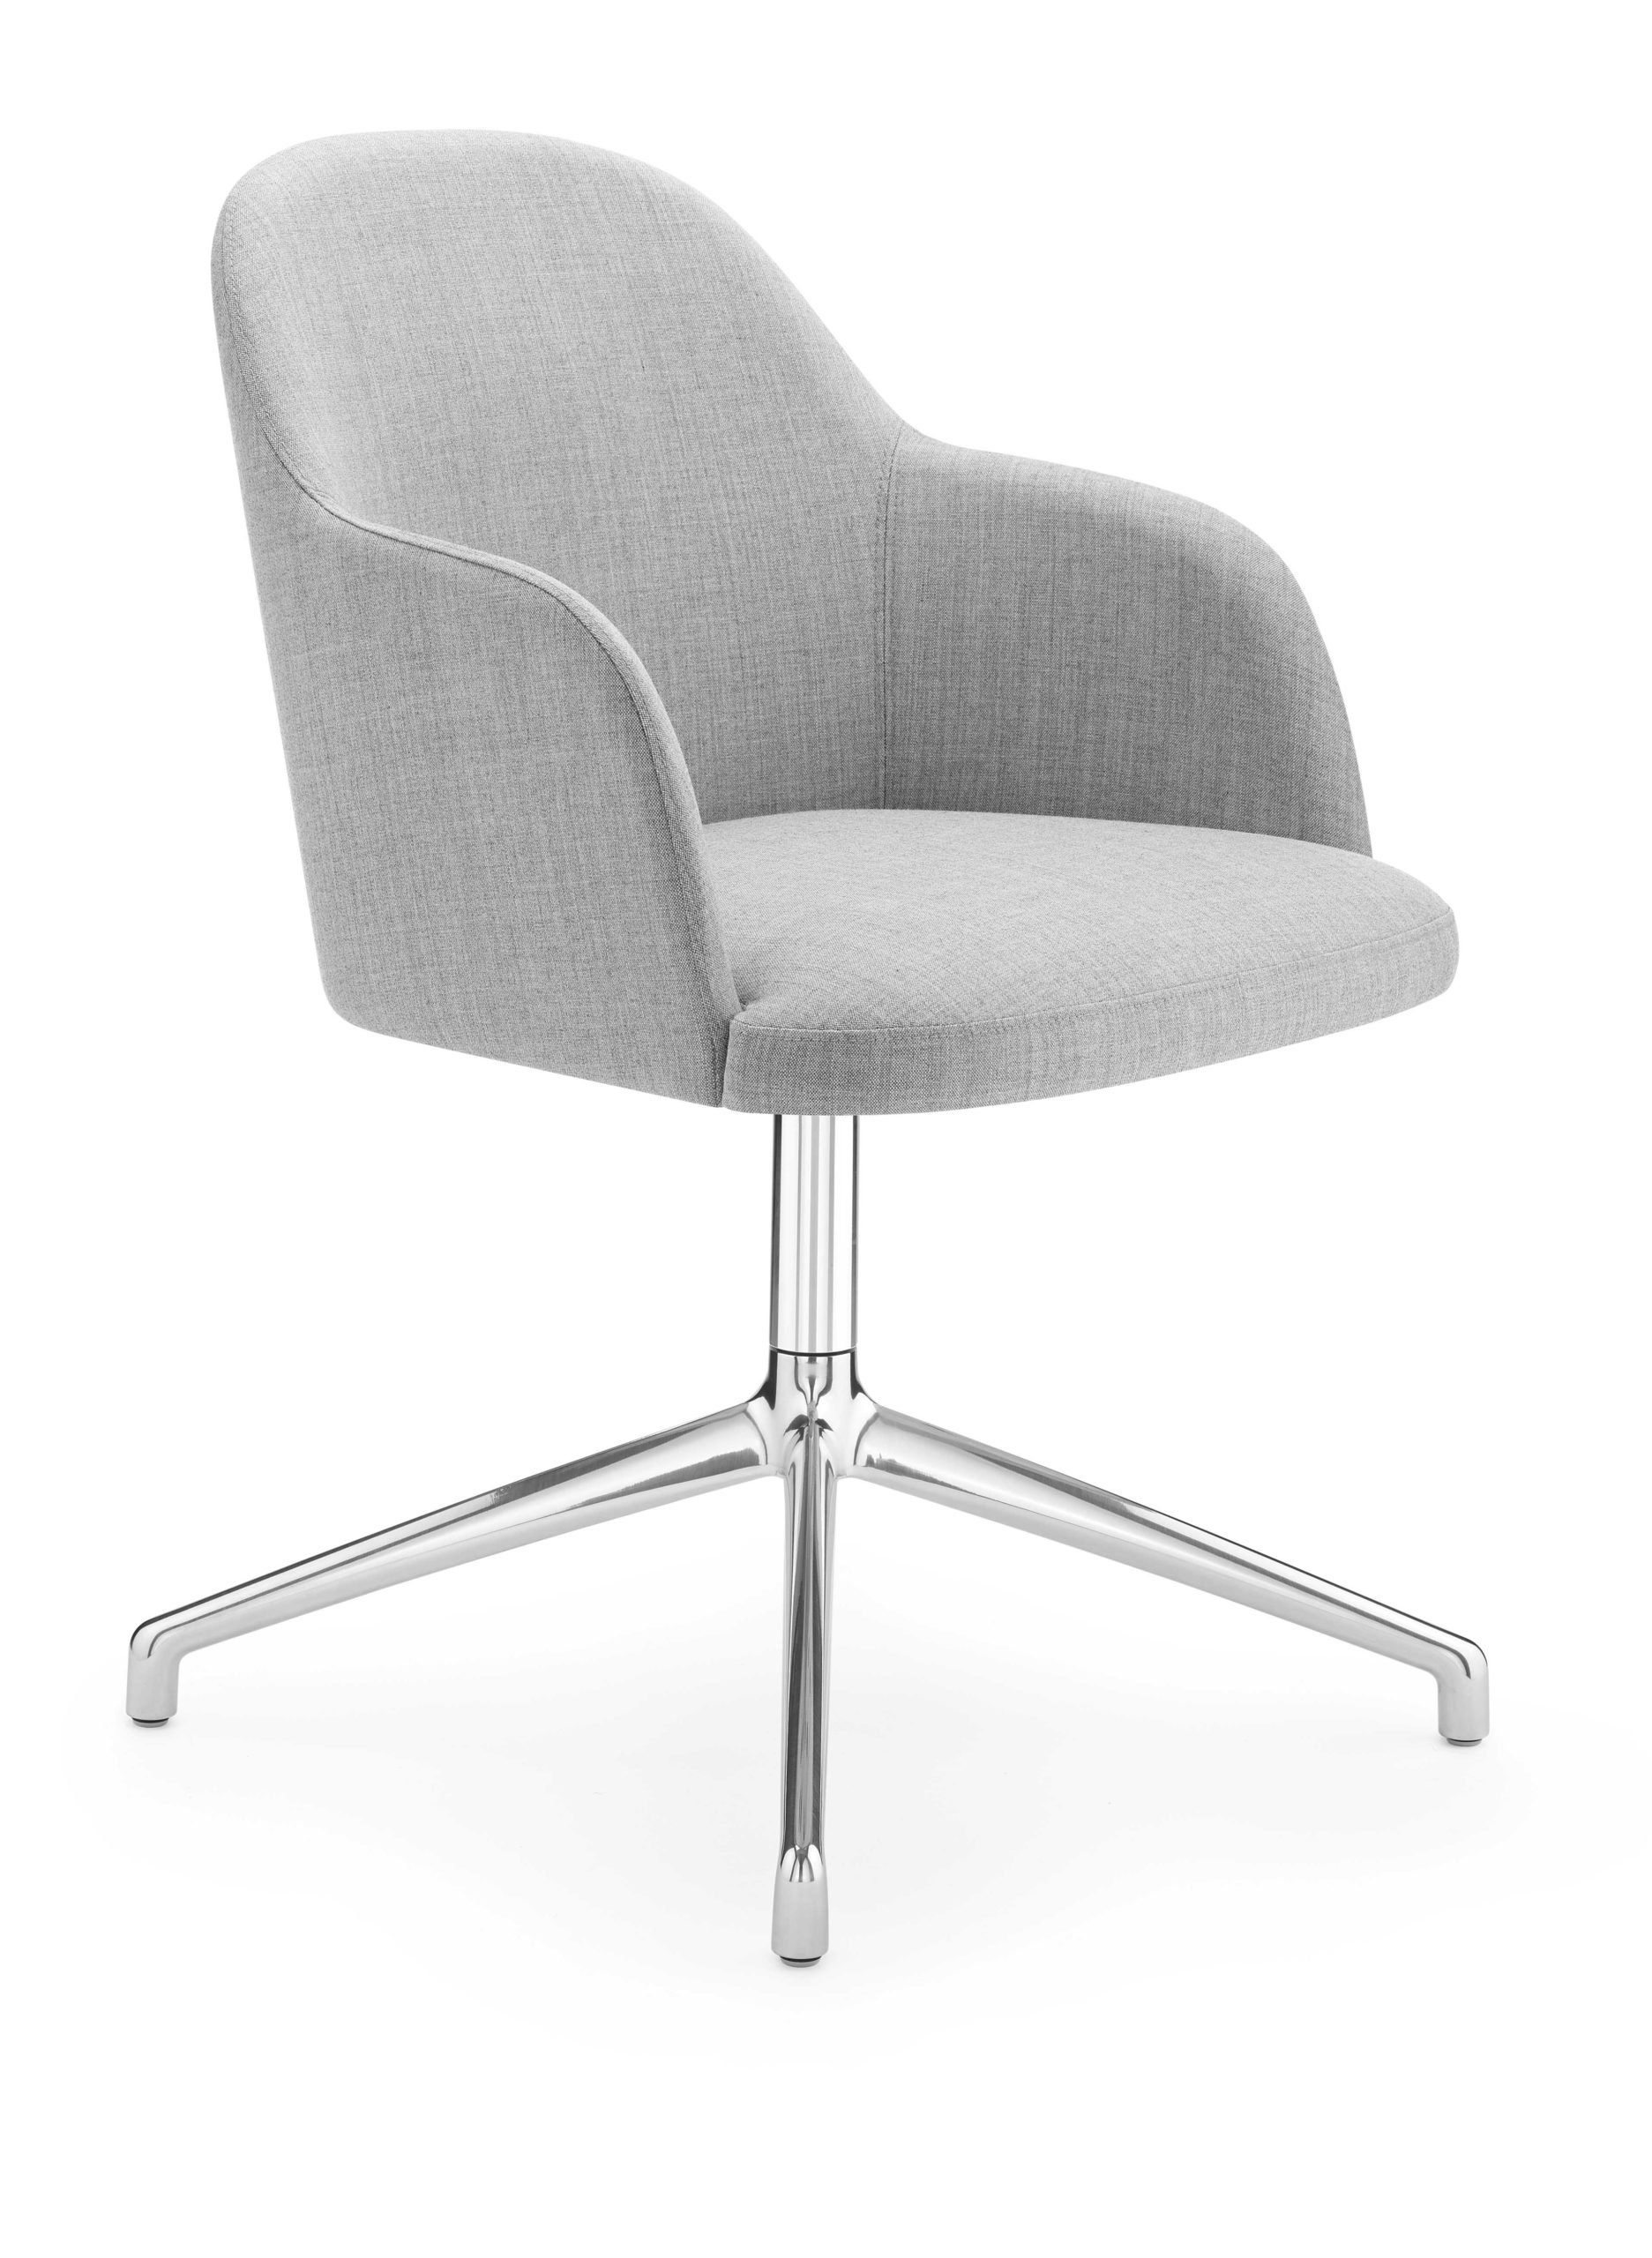 Isla. Chair - 4 Star Aluminum Swivel Base (ISL3) - Love That Design